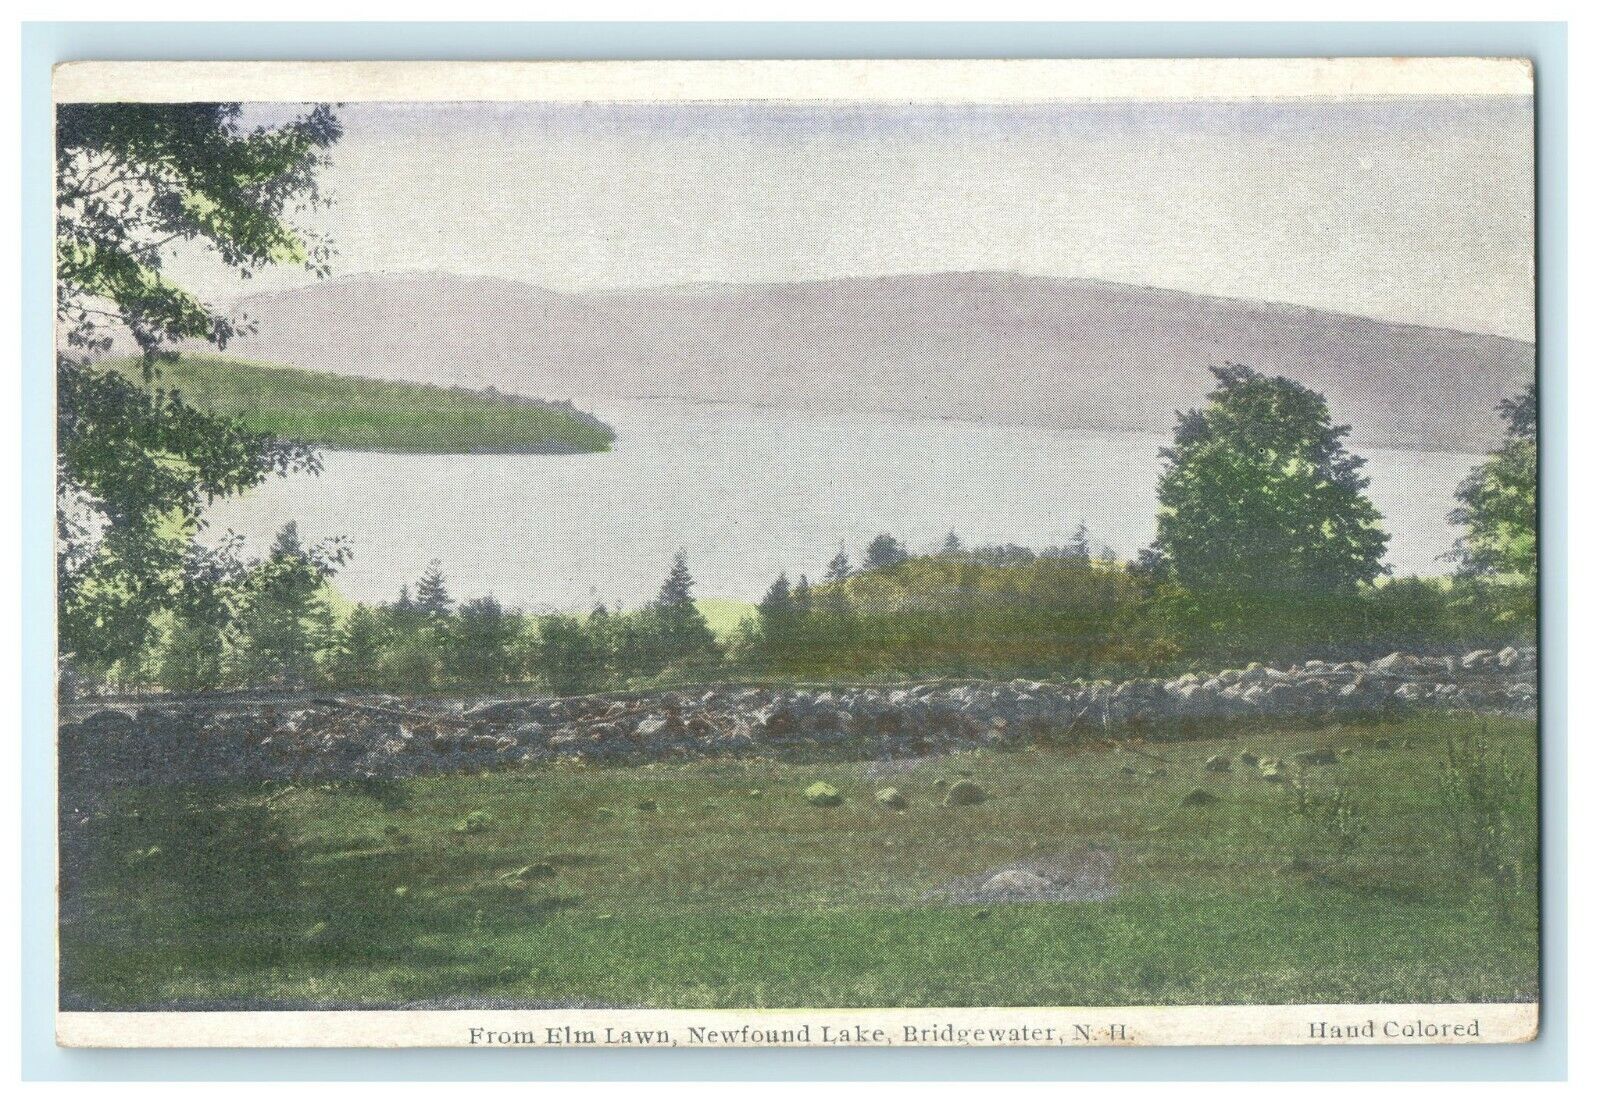 c1915 Elm Lawn Newfound Lake Bridgewater New Hampshire NH Handcolored Postcard